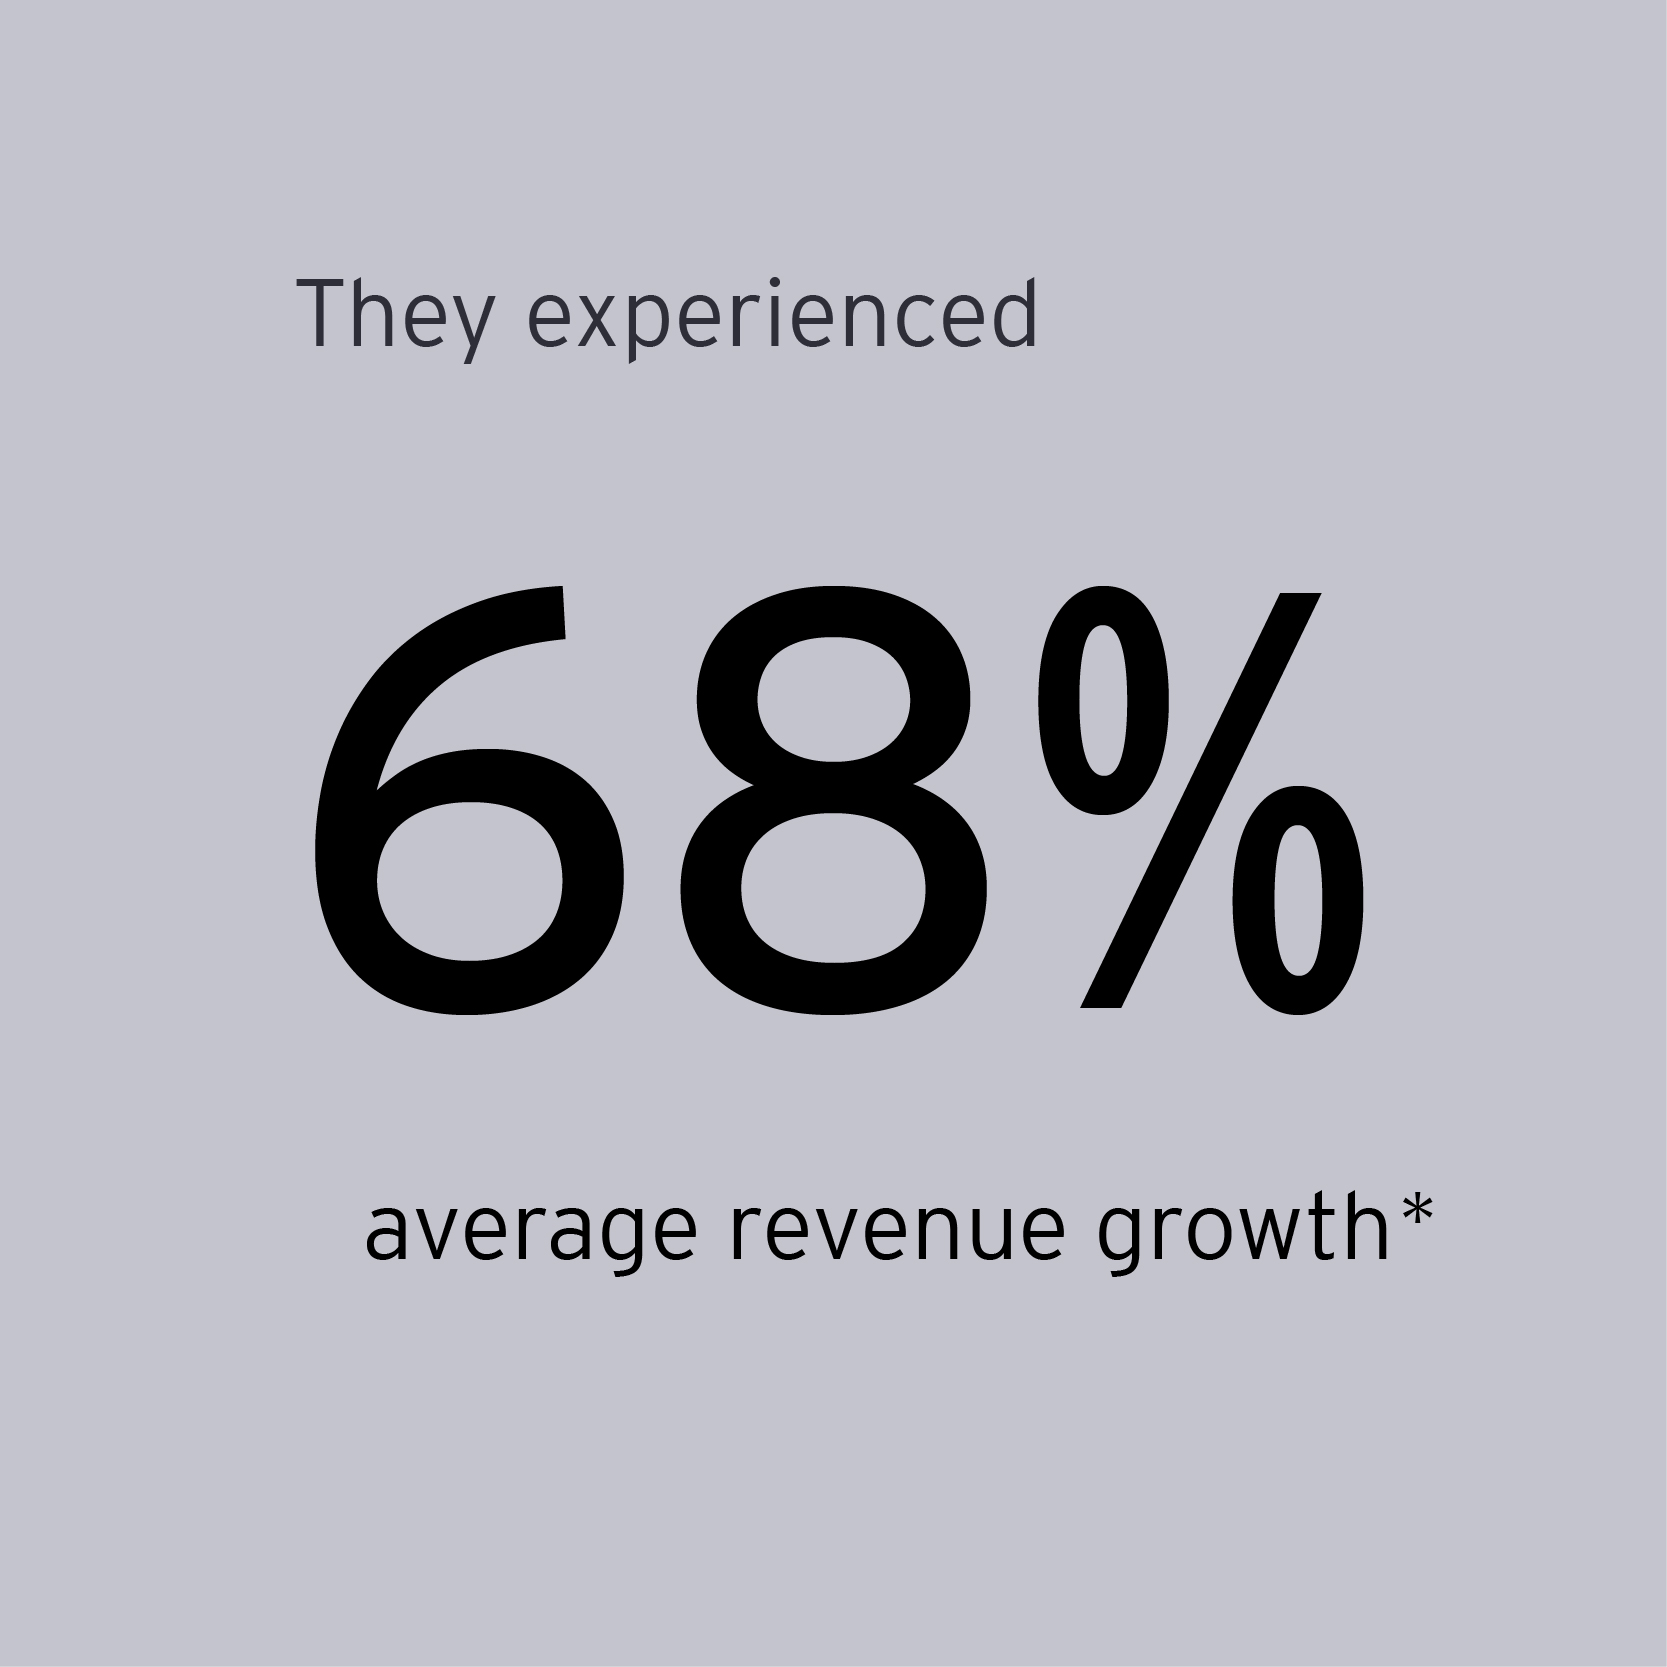 EOY winners experienced 68% average revenue growth